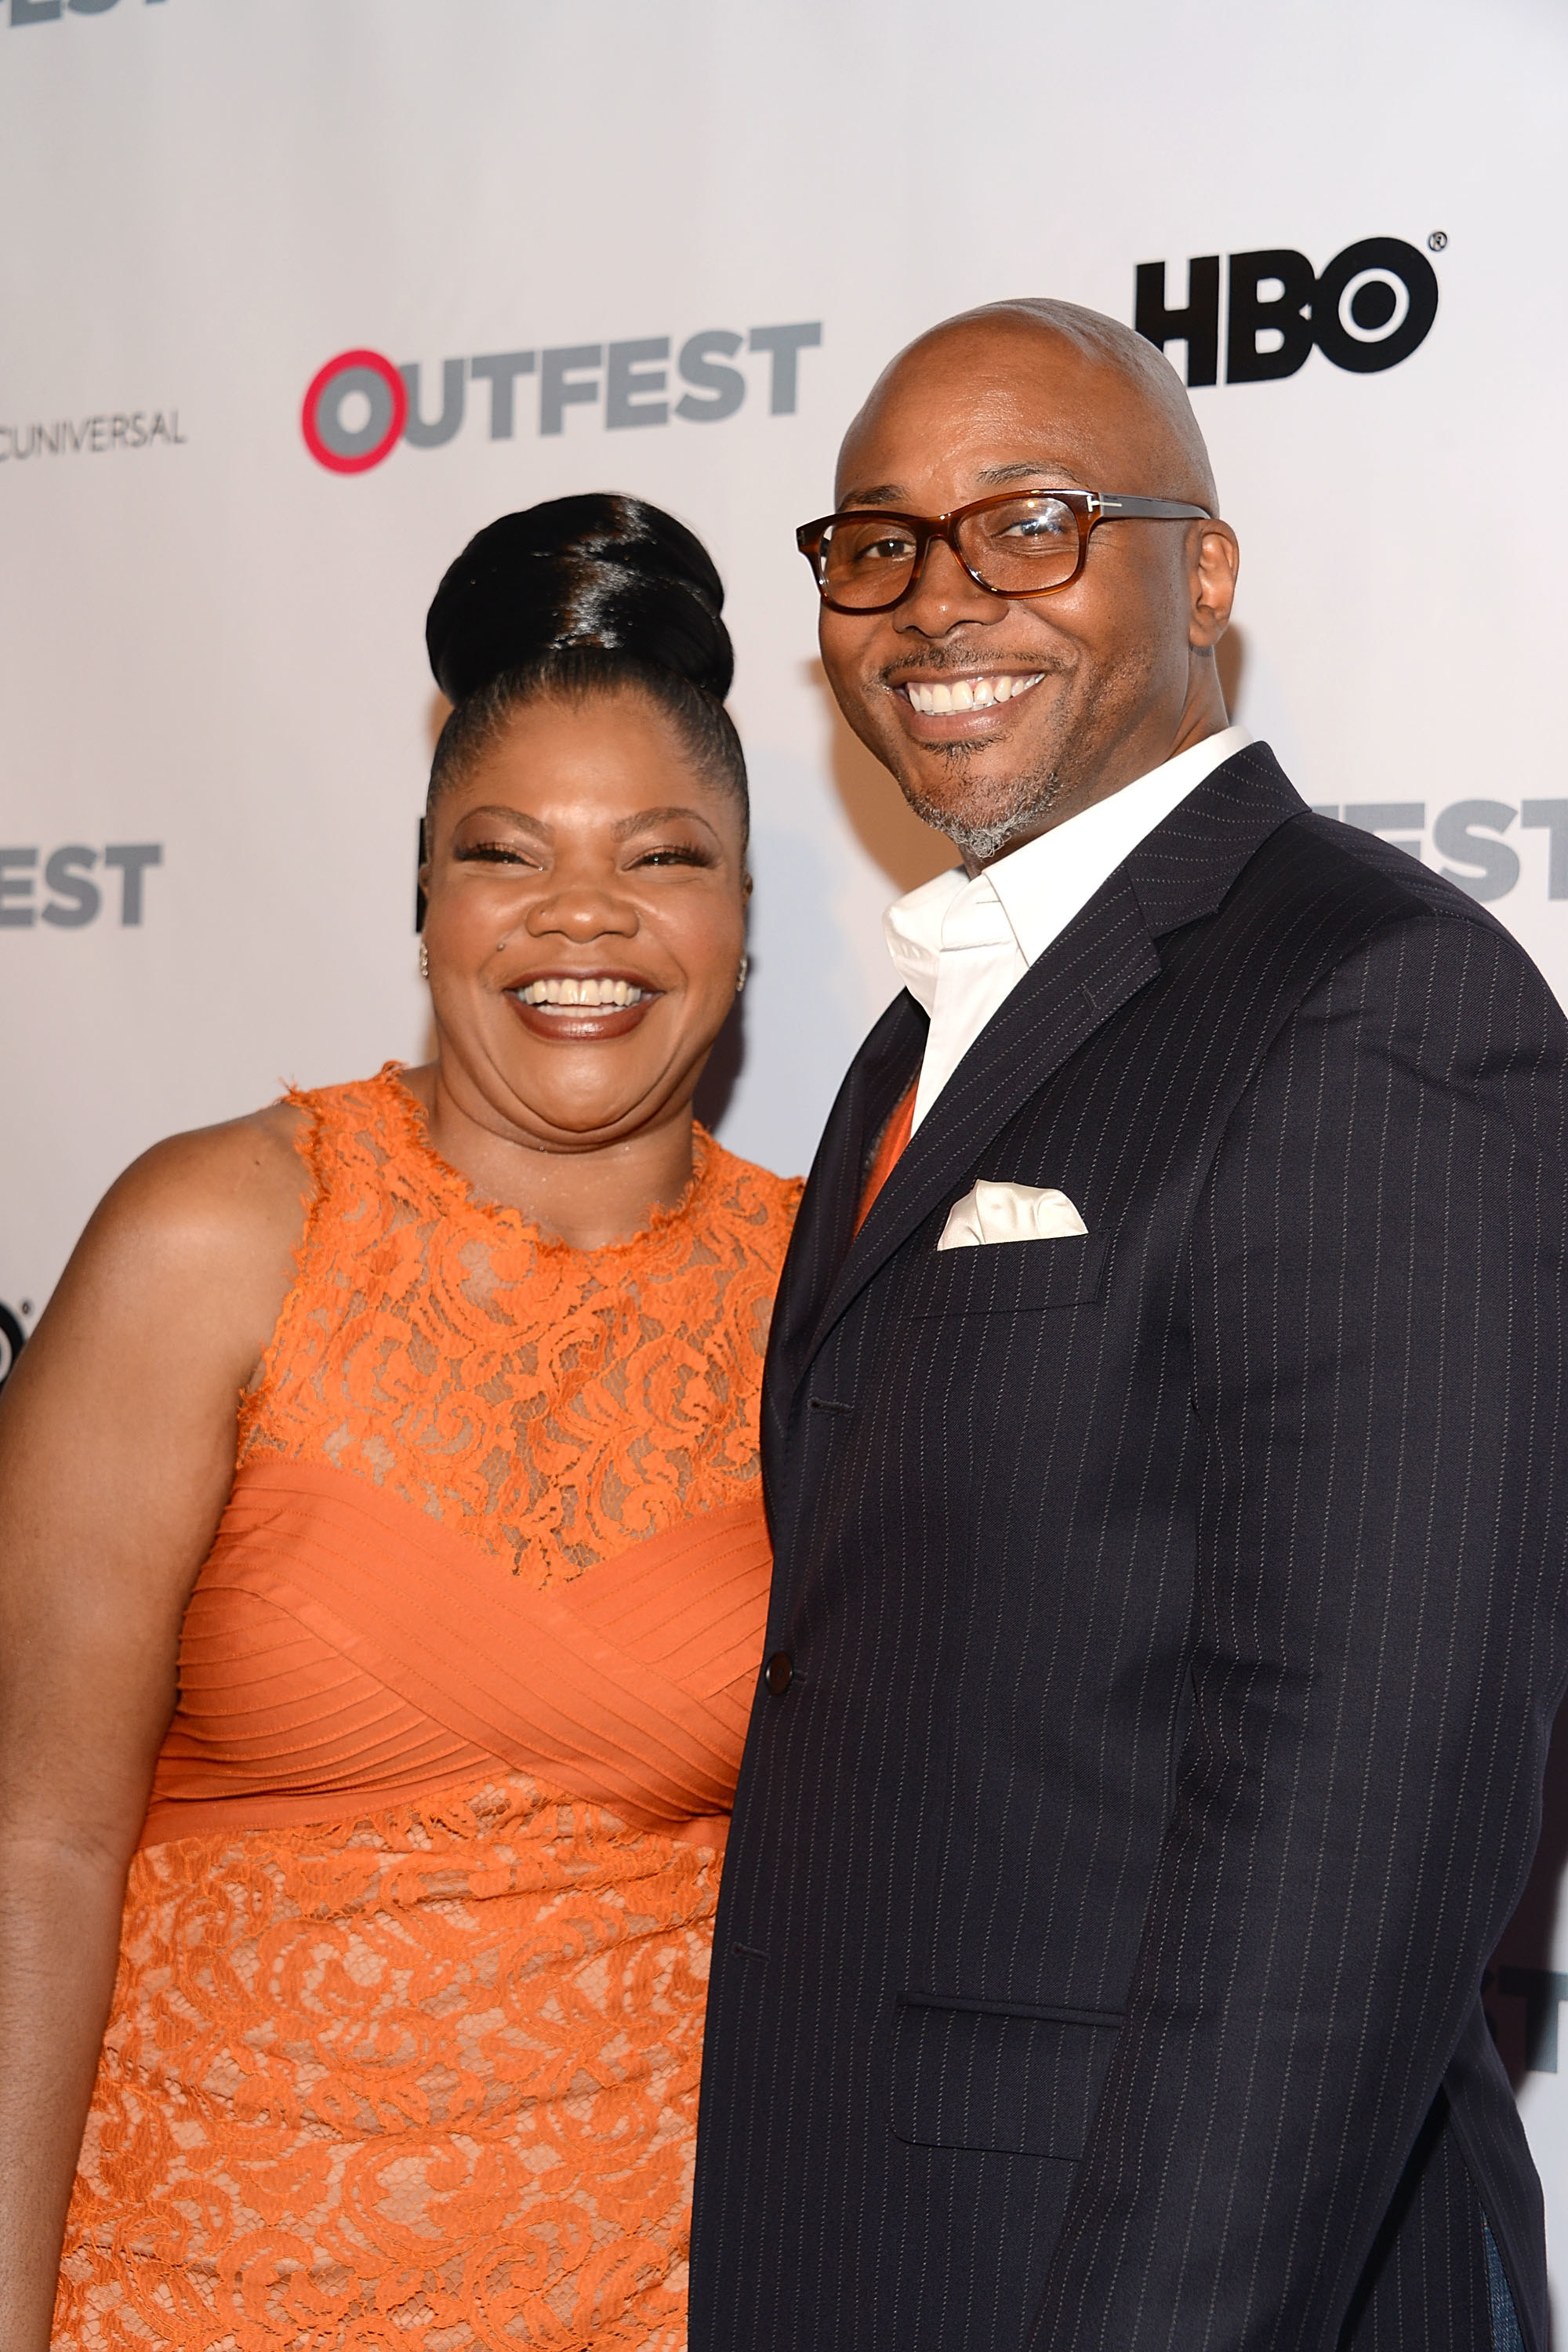 MoNique and husband Sydney Hicks attending a red carpet event together